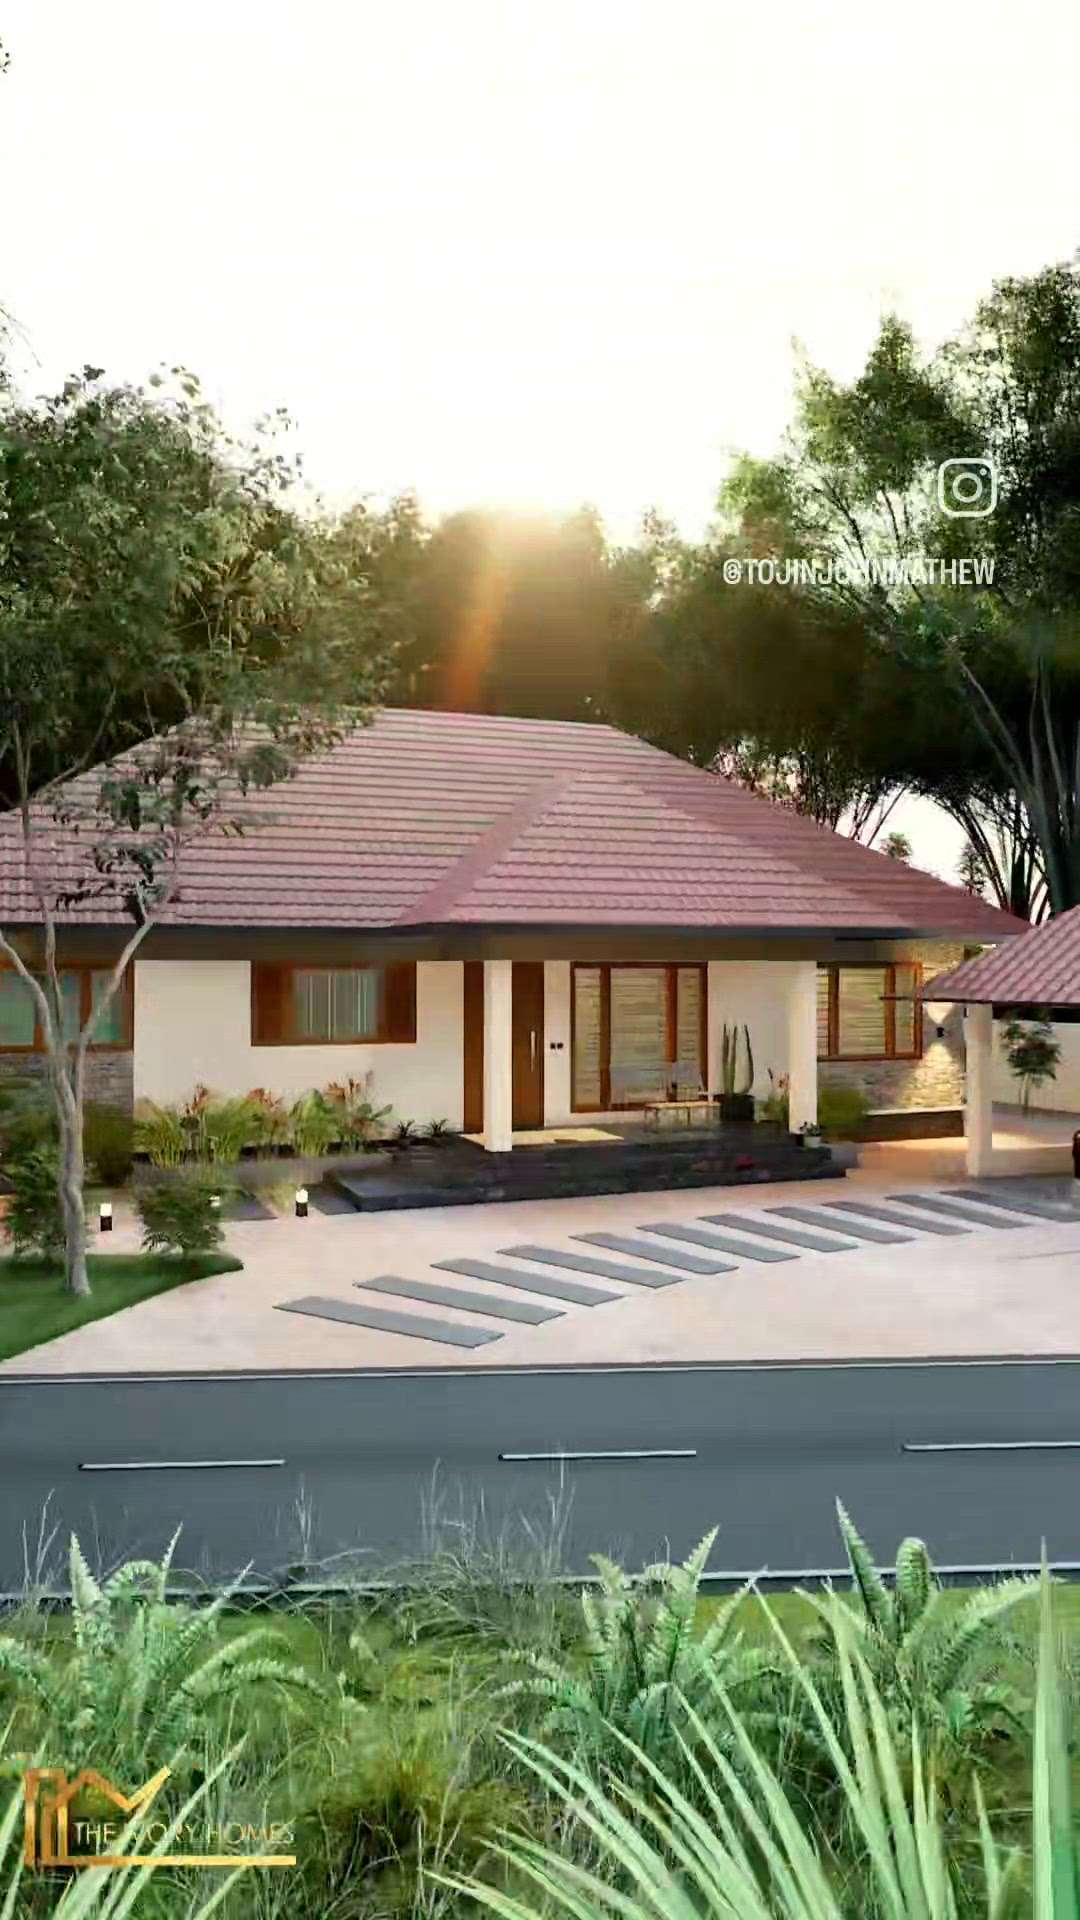 Kerala traditional home
#traditional #houseplans #homedecor #homeinterior #homedecoration #home #homestyle #homesweethome #homestyling #homeideas #homeinteriors #homeownership #housedesign #keralatraditionalhouse #kerala #keralahomes #keralahouse #keralahomedesign #inventoryhomes #inventoryhomeskerala #inventorykerala #keralastyle #keralatrvel #3dsmax #vrayrender #lumion #walkthrough #animation #tamilhomes #tamilhouse #indiahomedecor